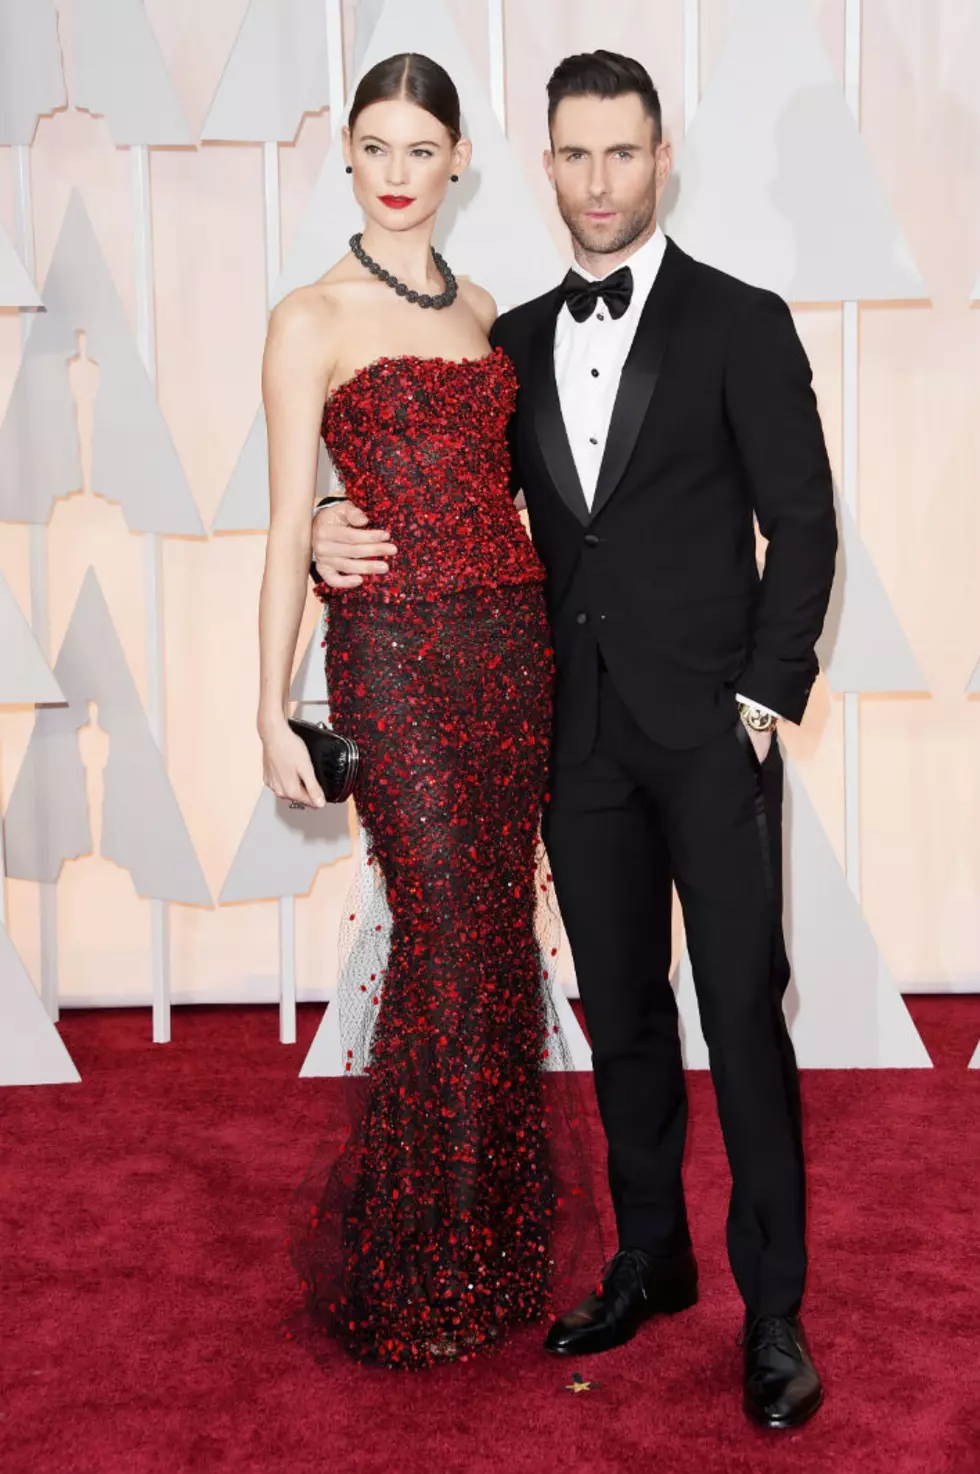 Adam Levine Kills His Performance of "Lost Stars" at the 2015 Oscars